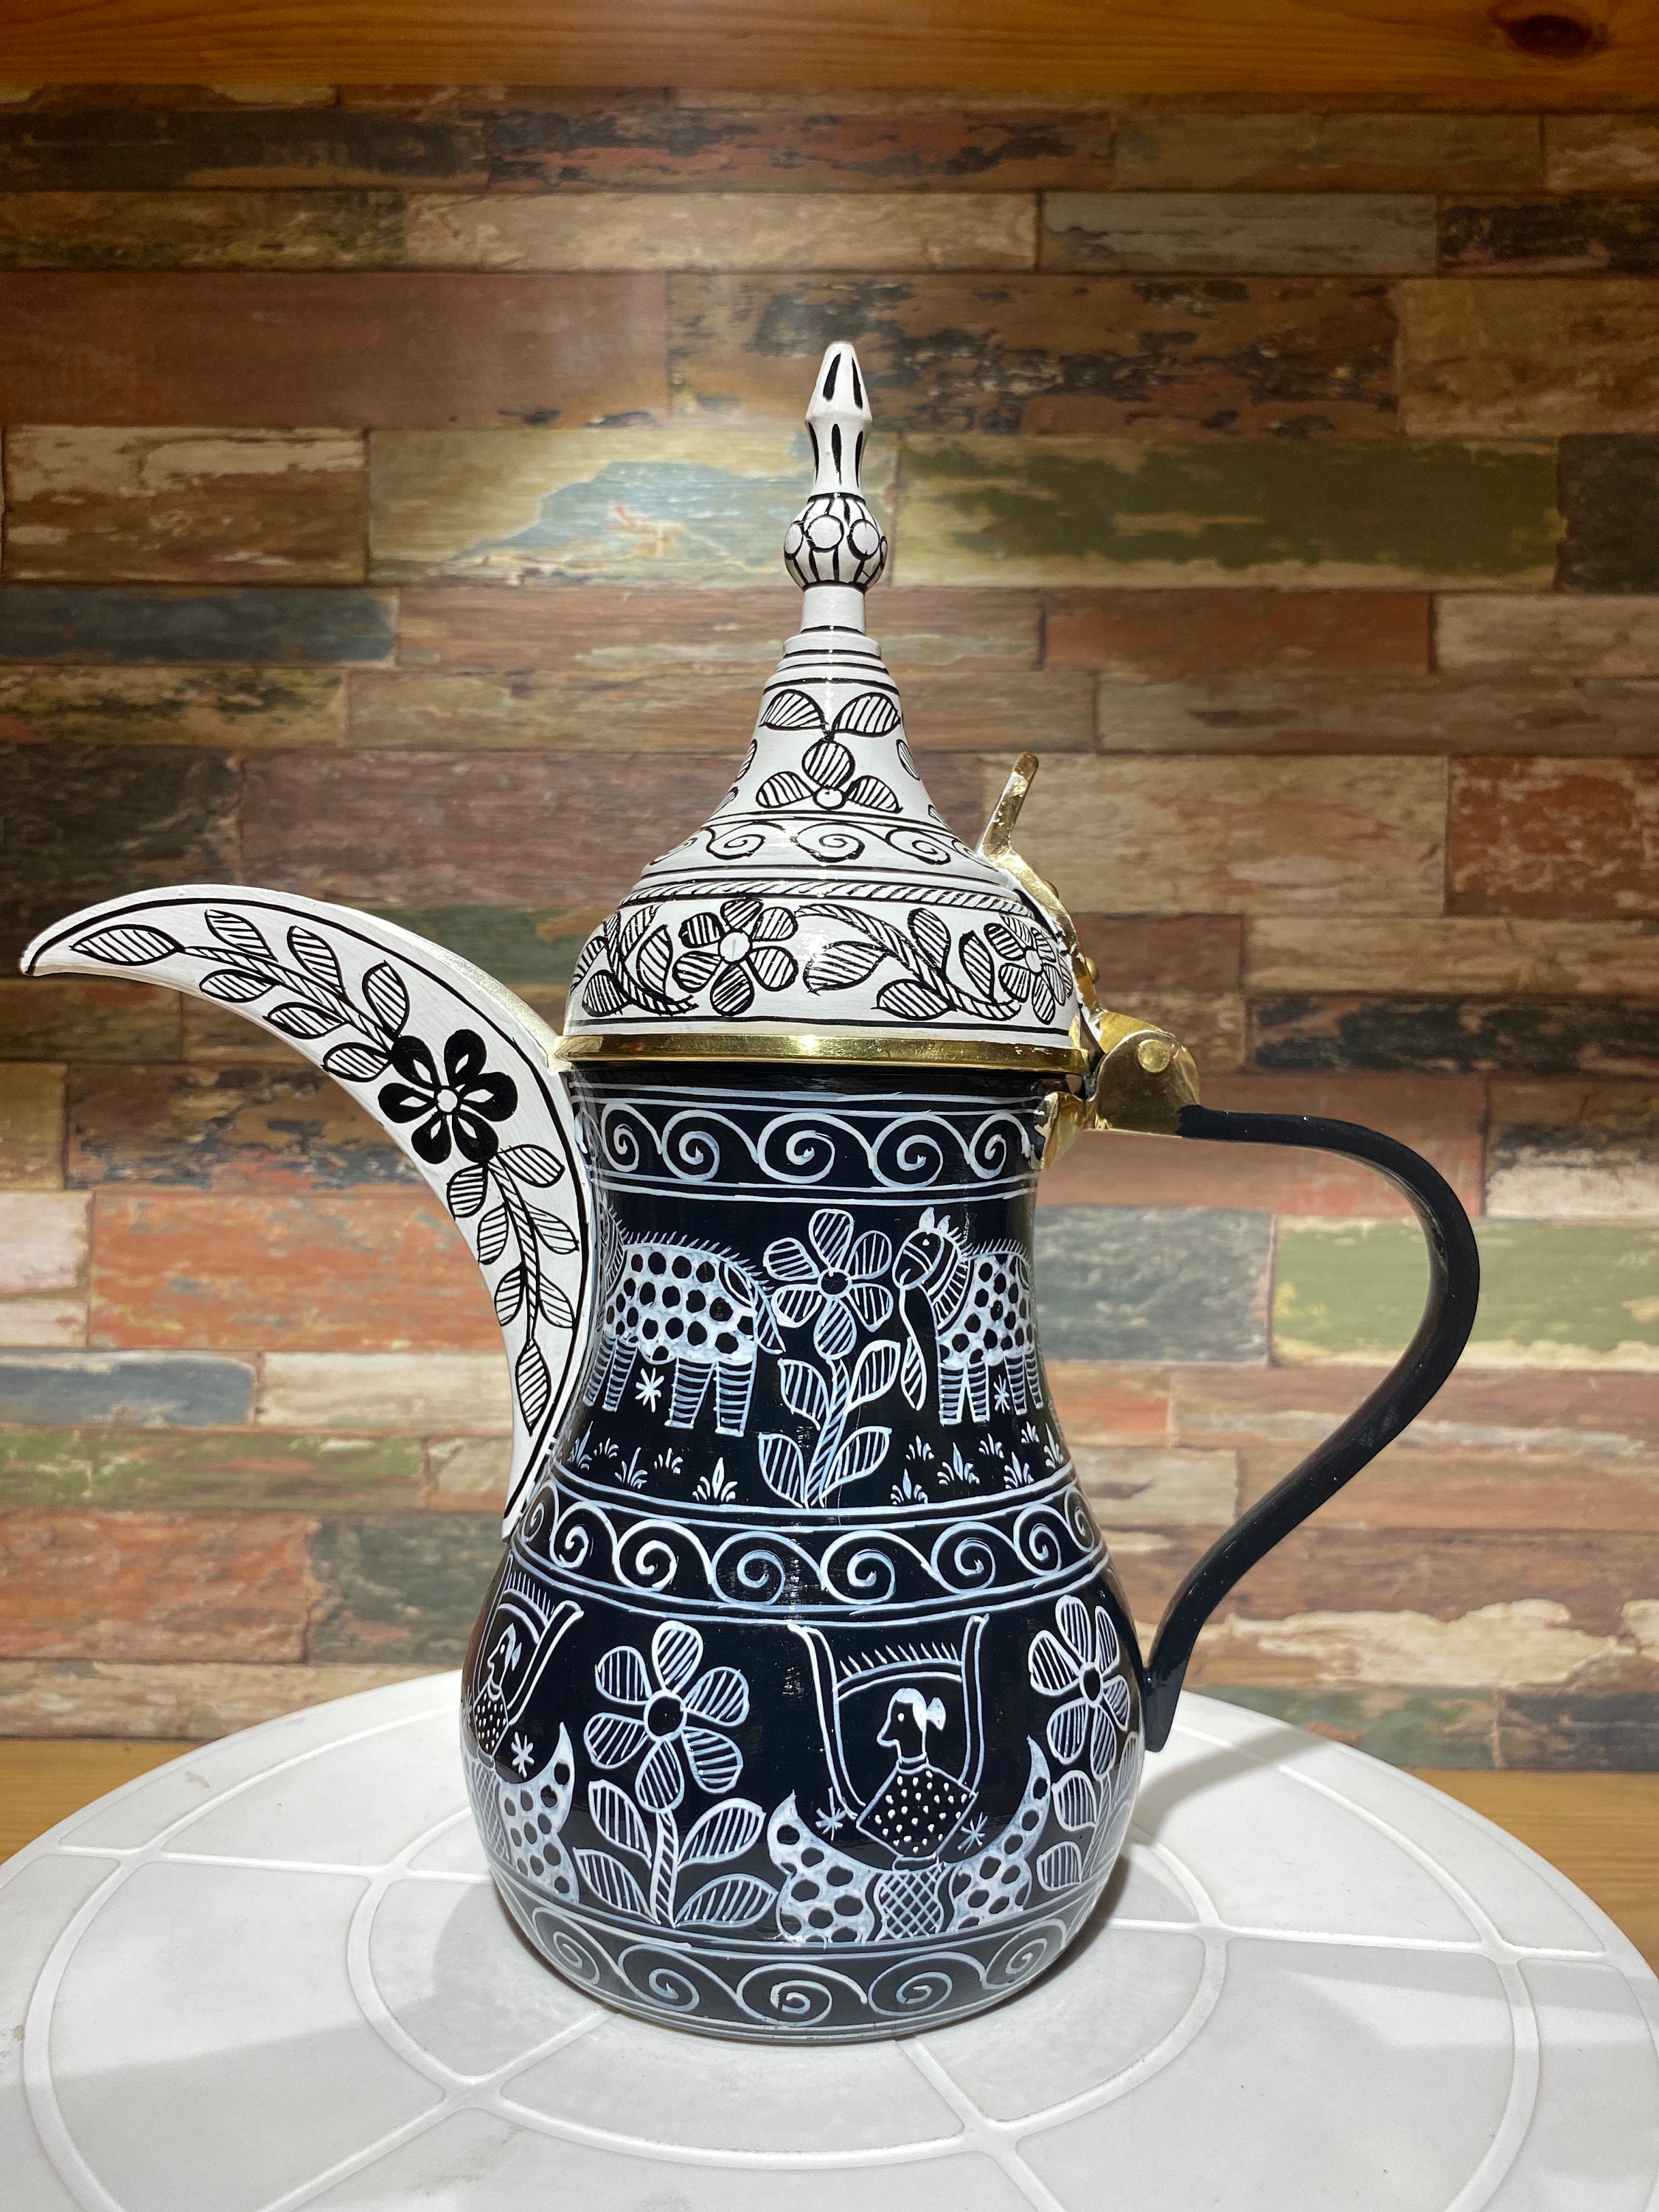 KAUSHALAM SMALL TEA KETTLE - KING & QUEEN, Handmade By Mrinalika Jain